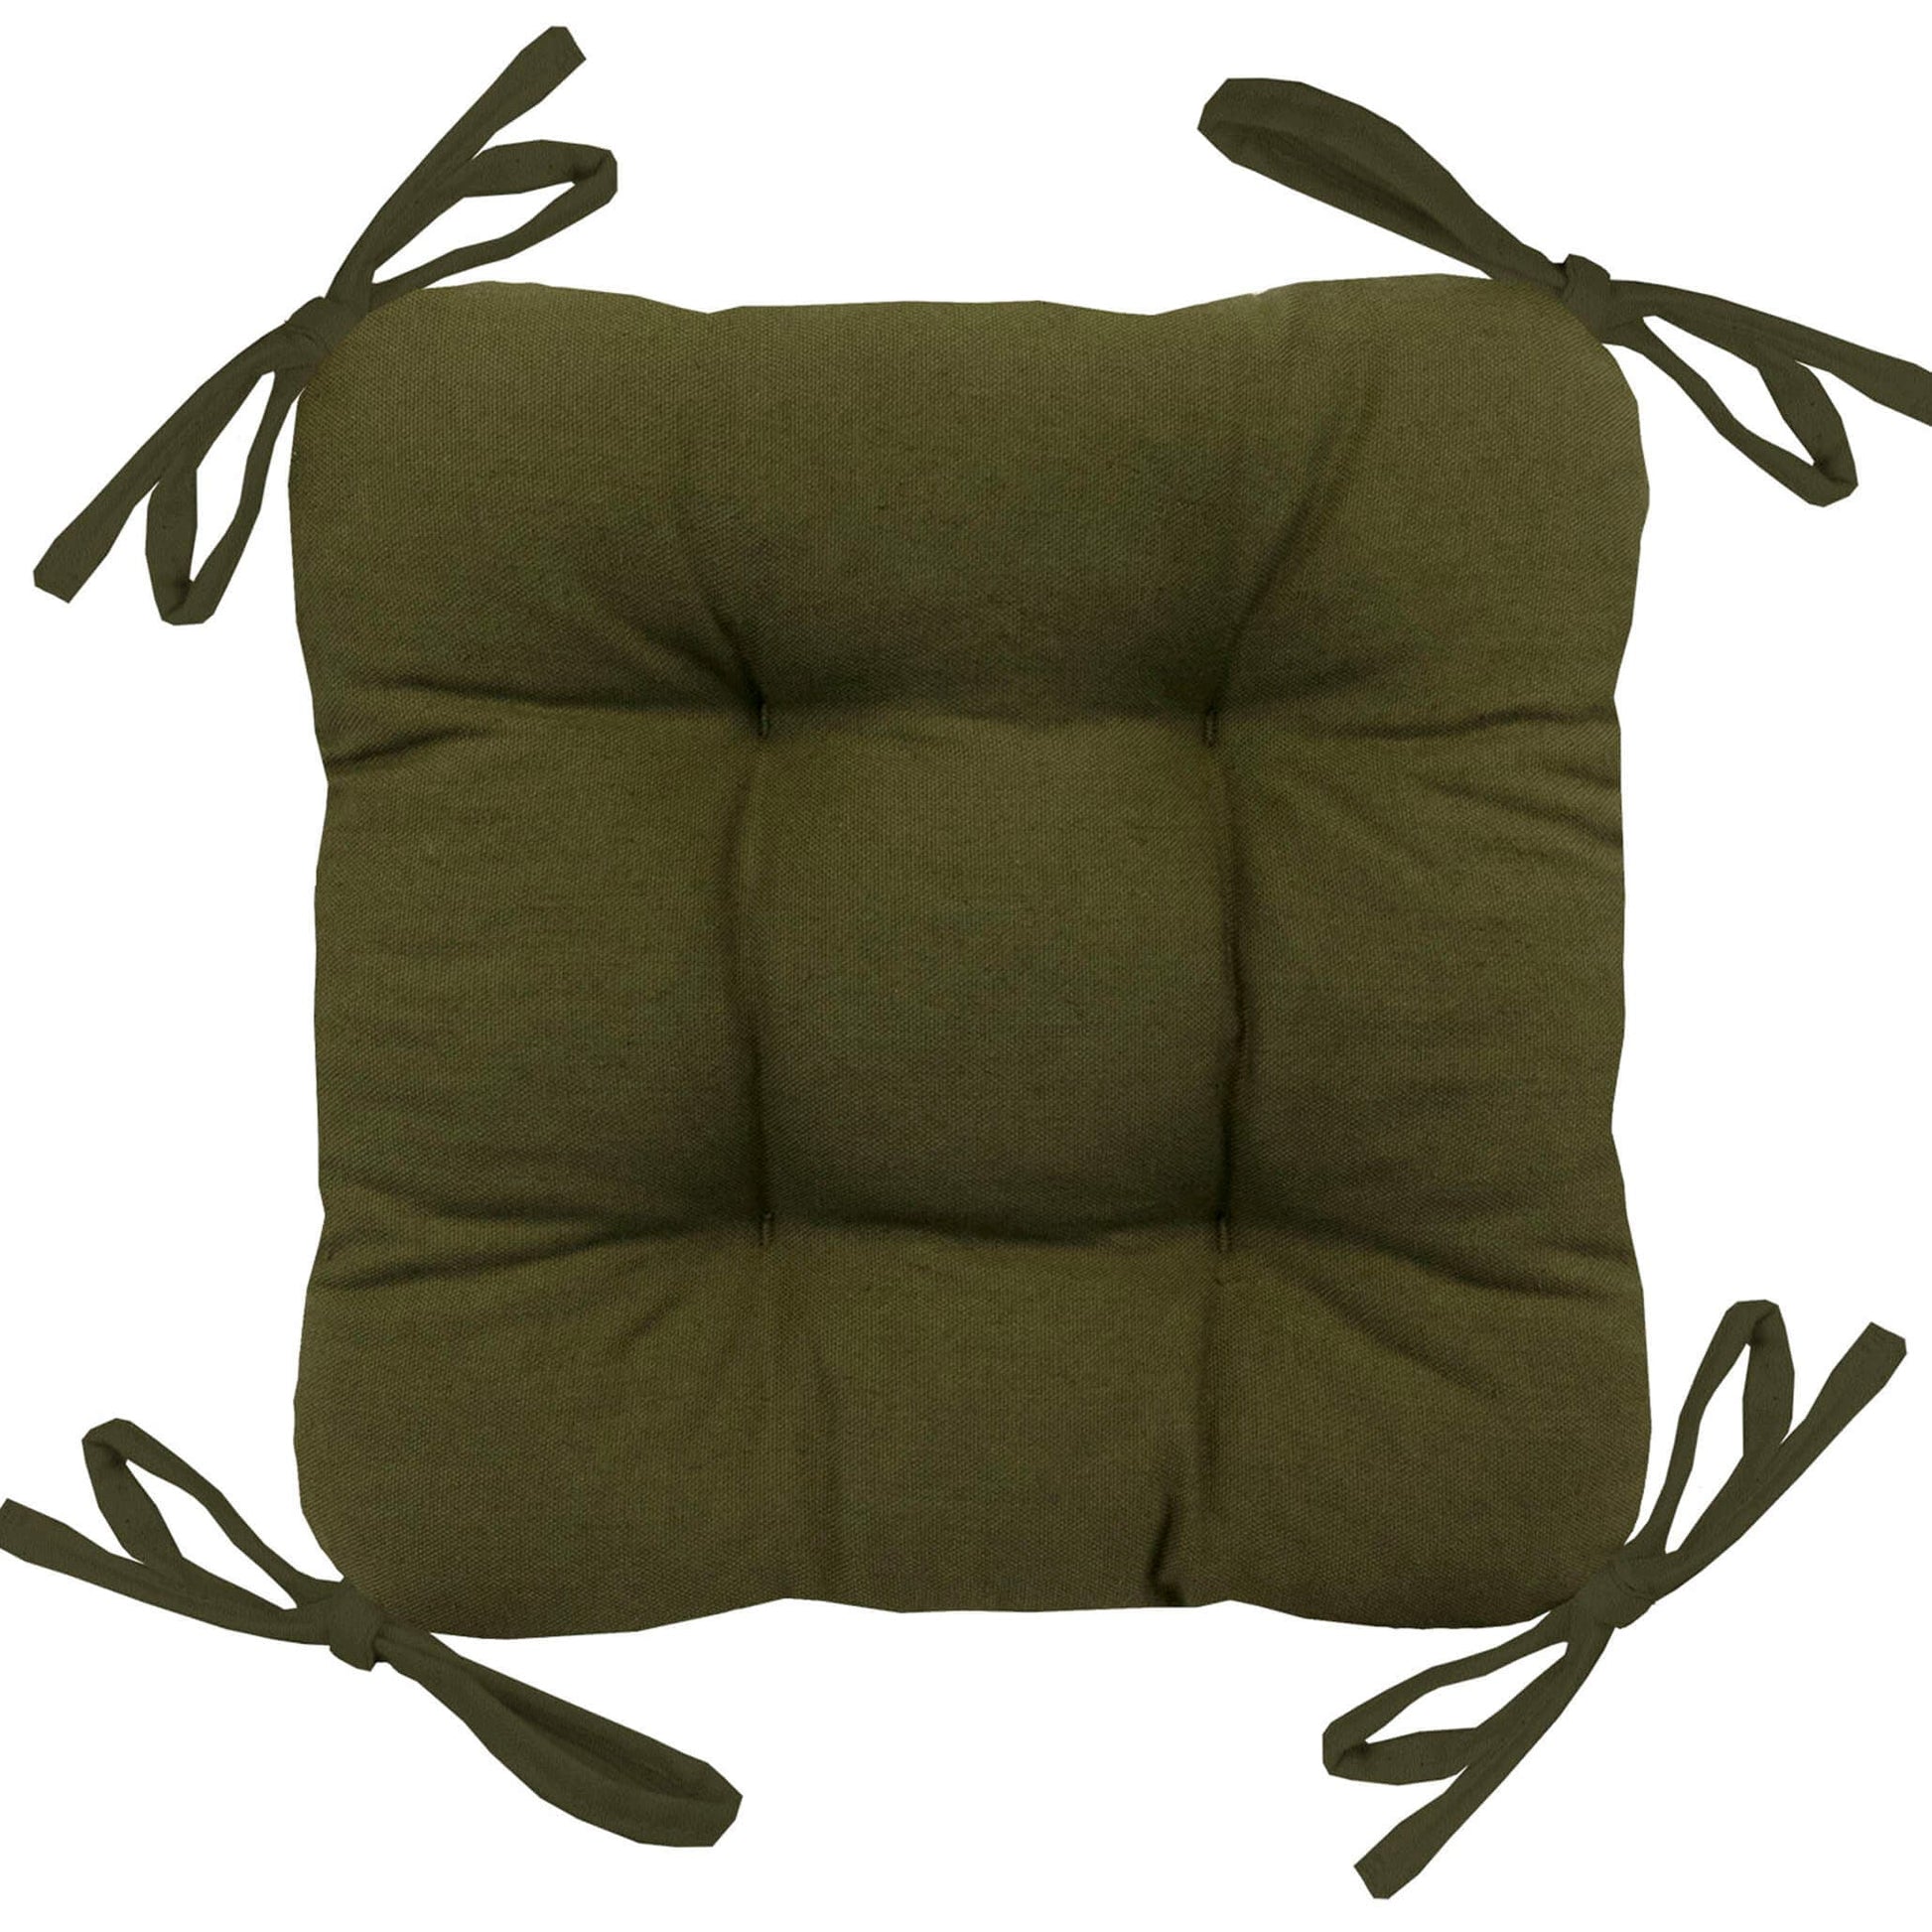 Cotton Duck Boxwwod Green Square Industrial Bar Stool Cushion - Latex Foam Fill - Barnett Home Decor 